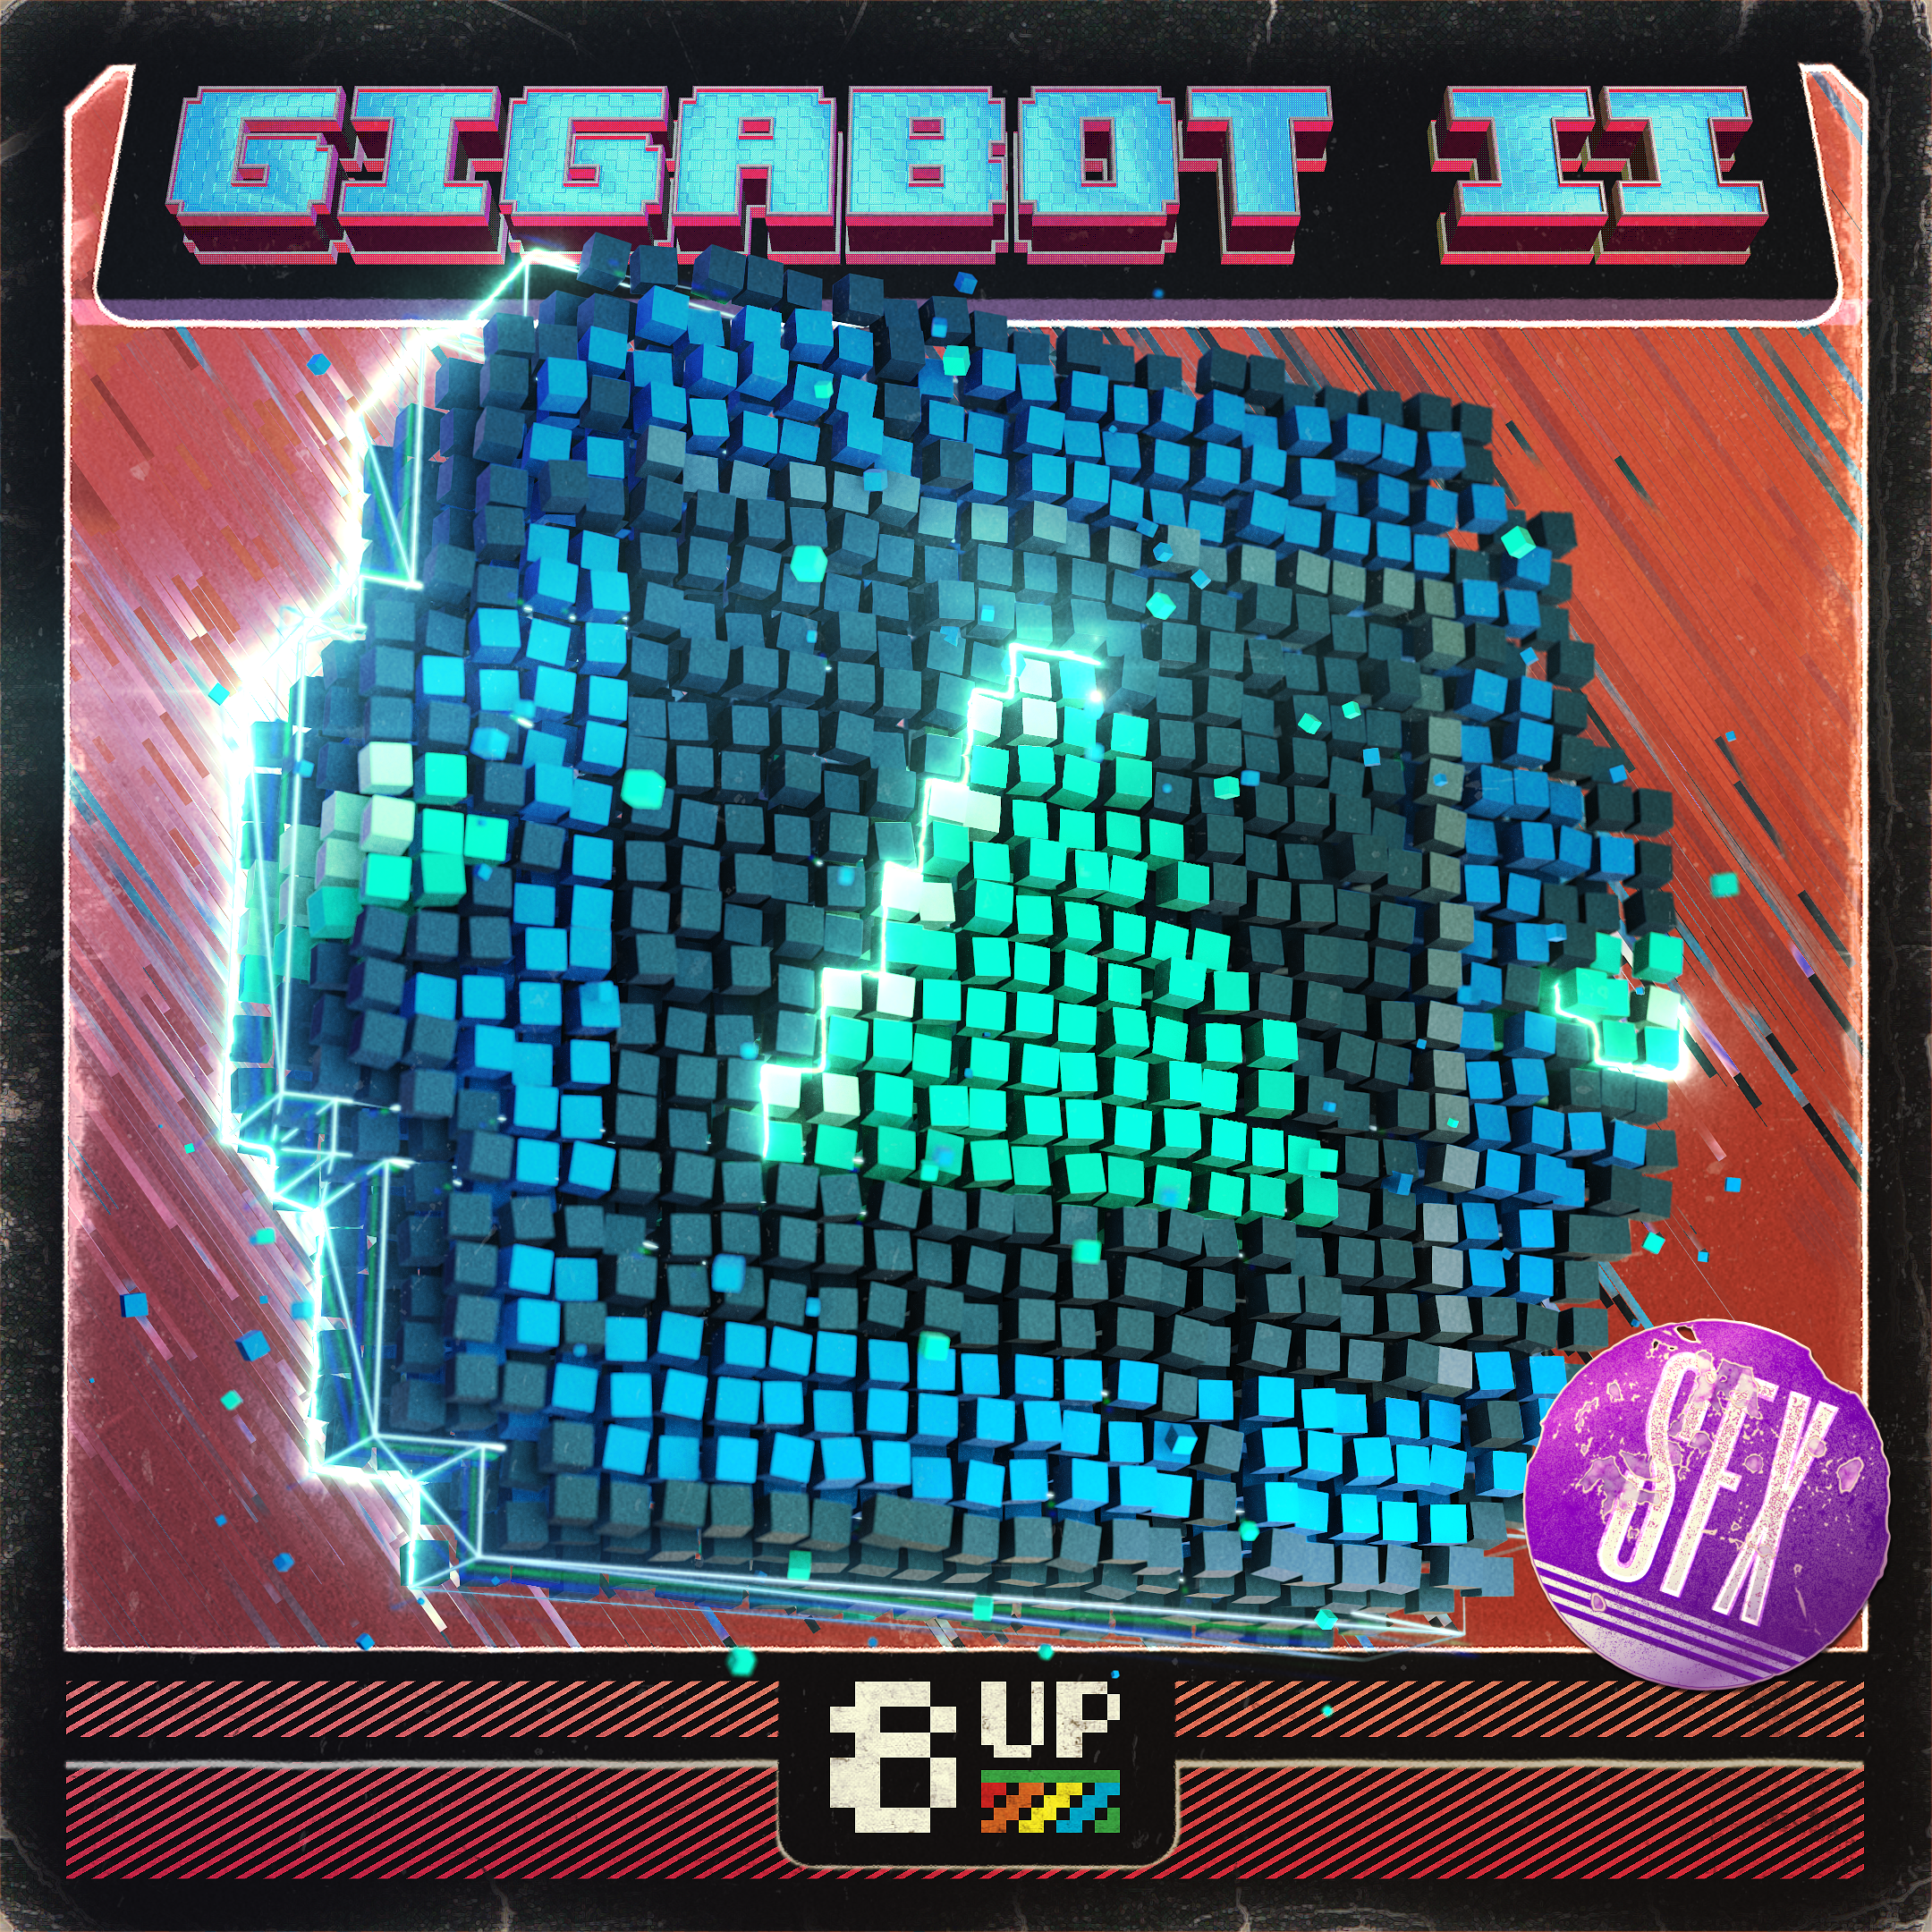 Gigabot 2 Sound Effects Packshot by 8UP